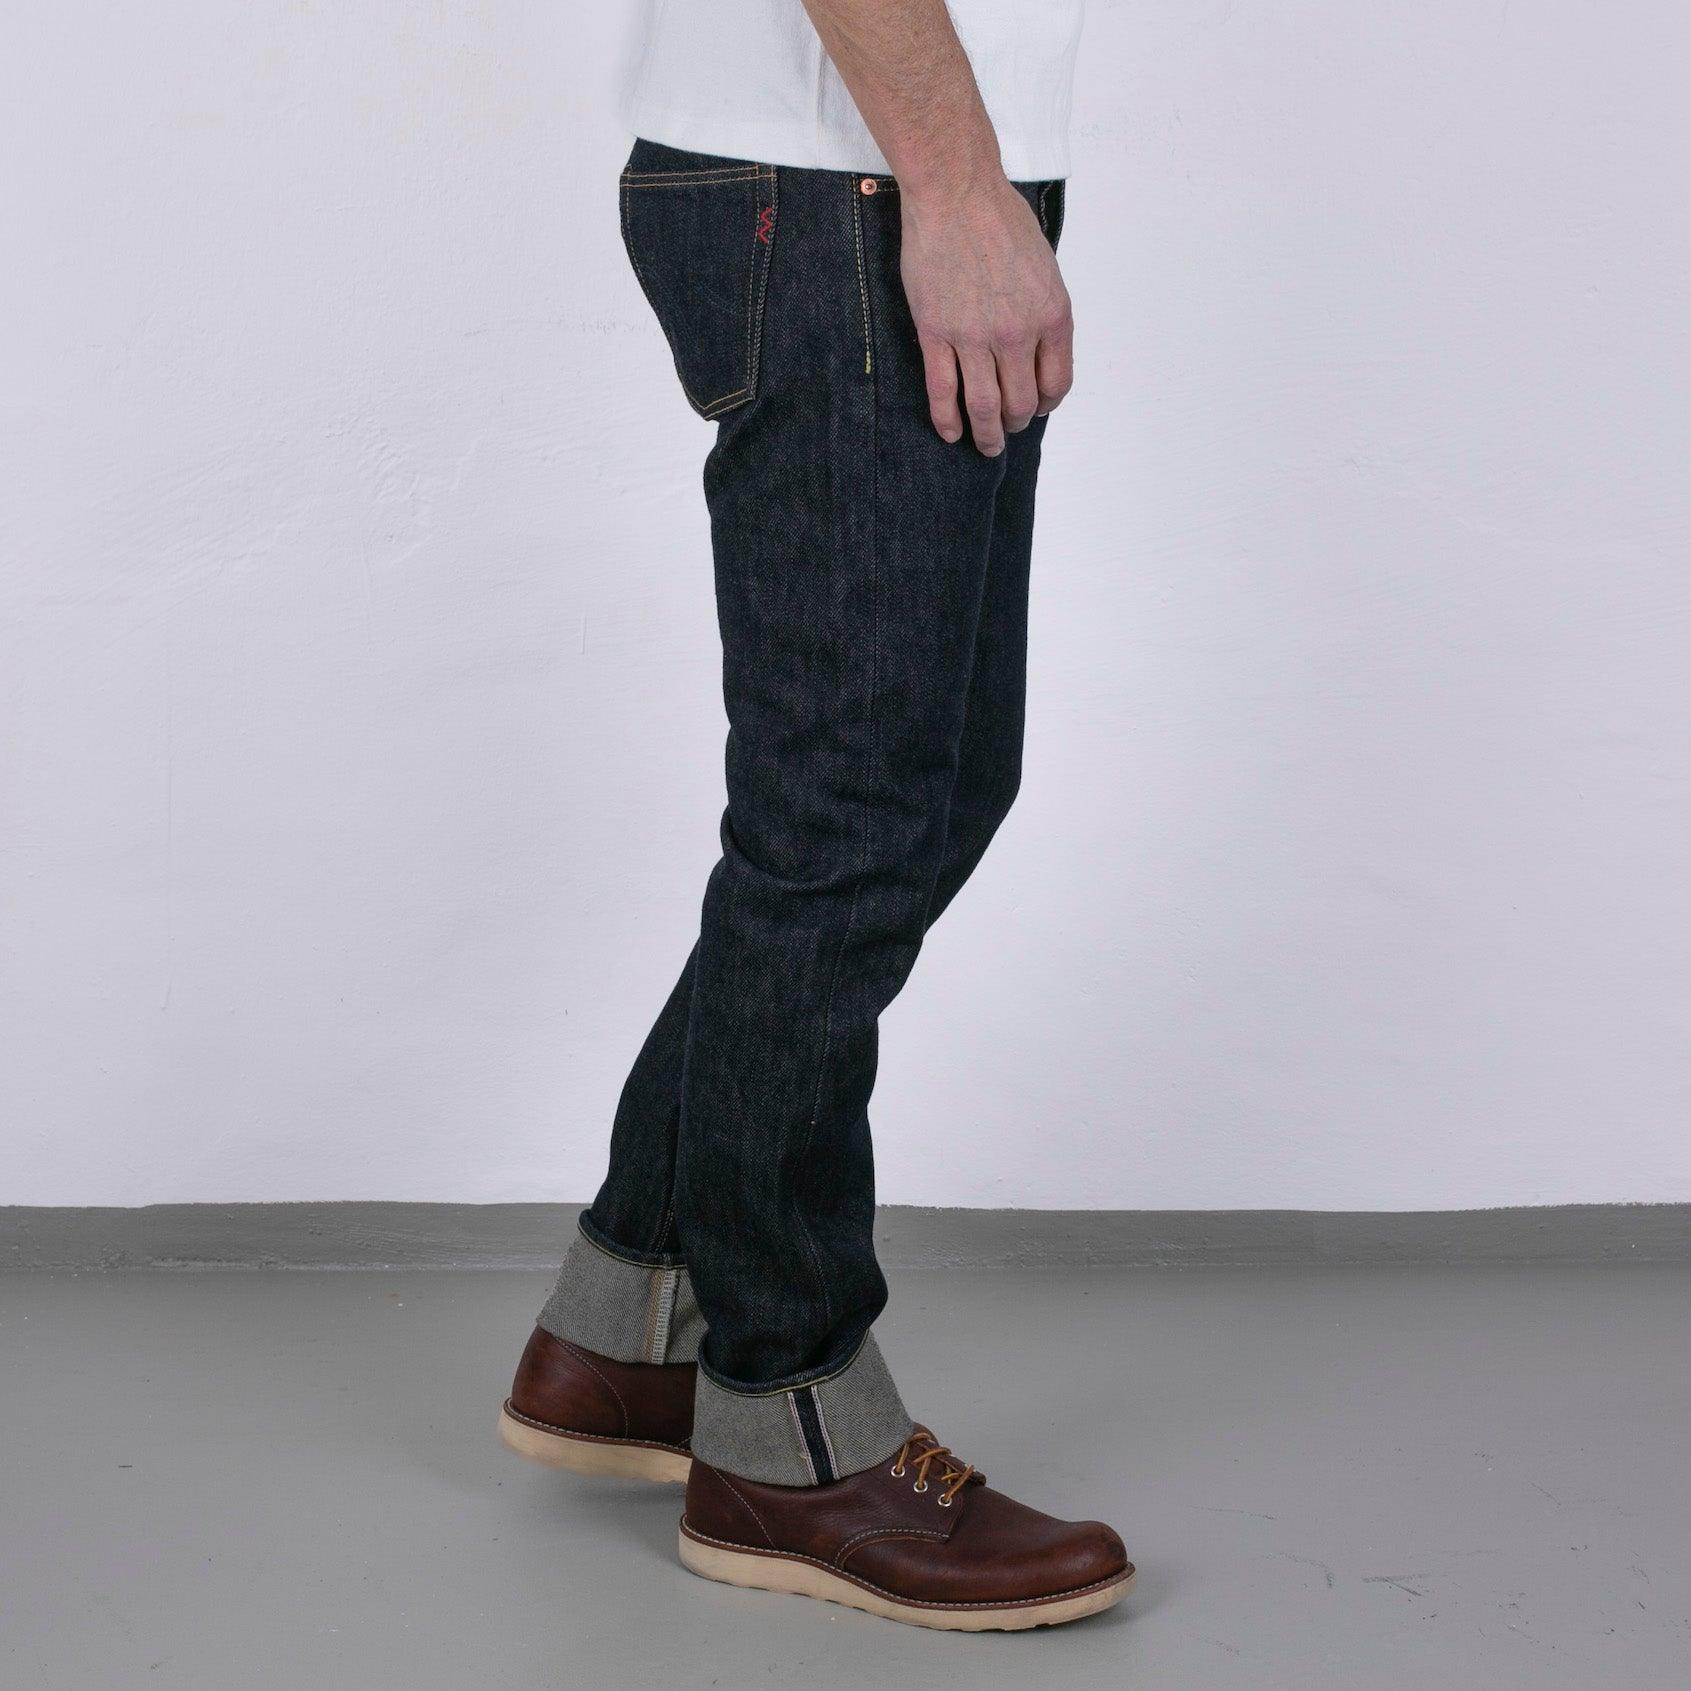 IH-555S-21 - 21oz Selvedge Denim Super Slim Jeans Indigo